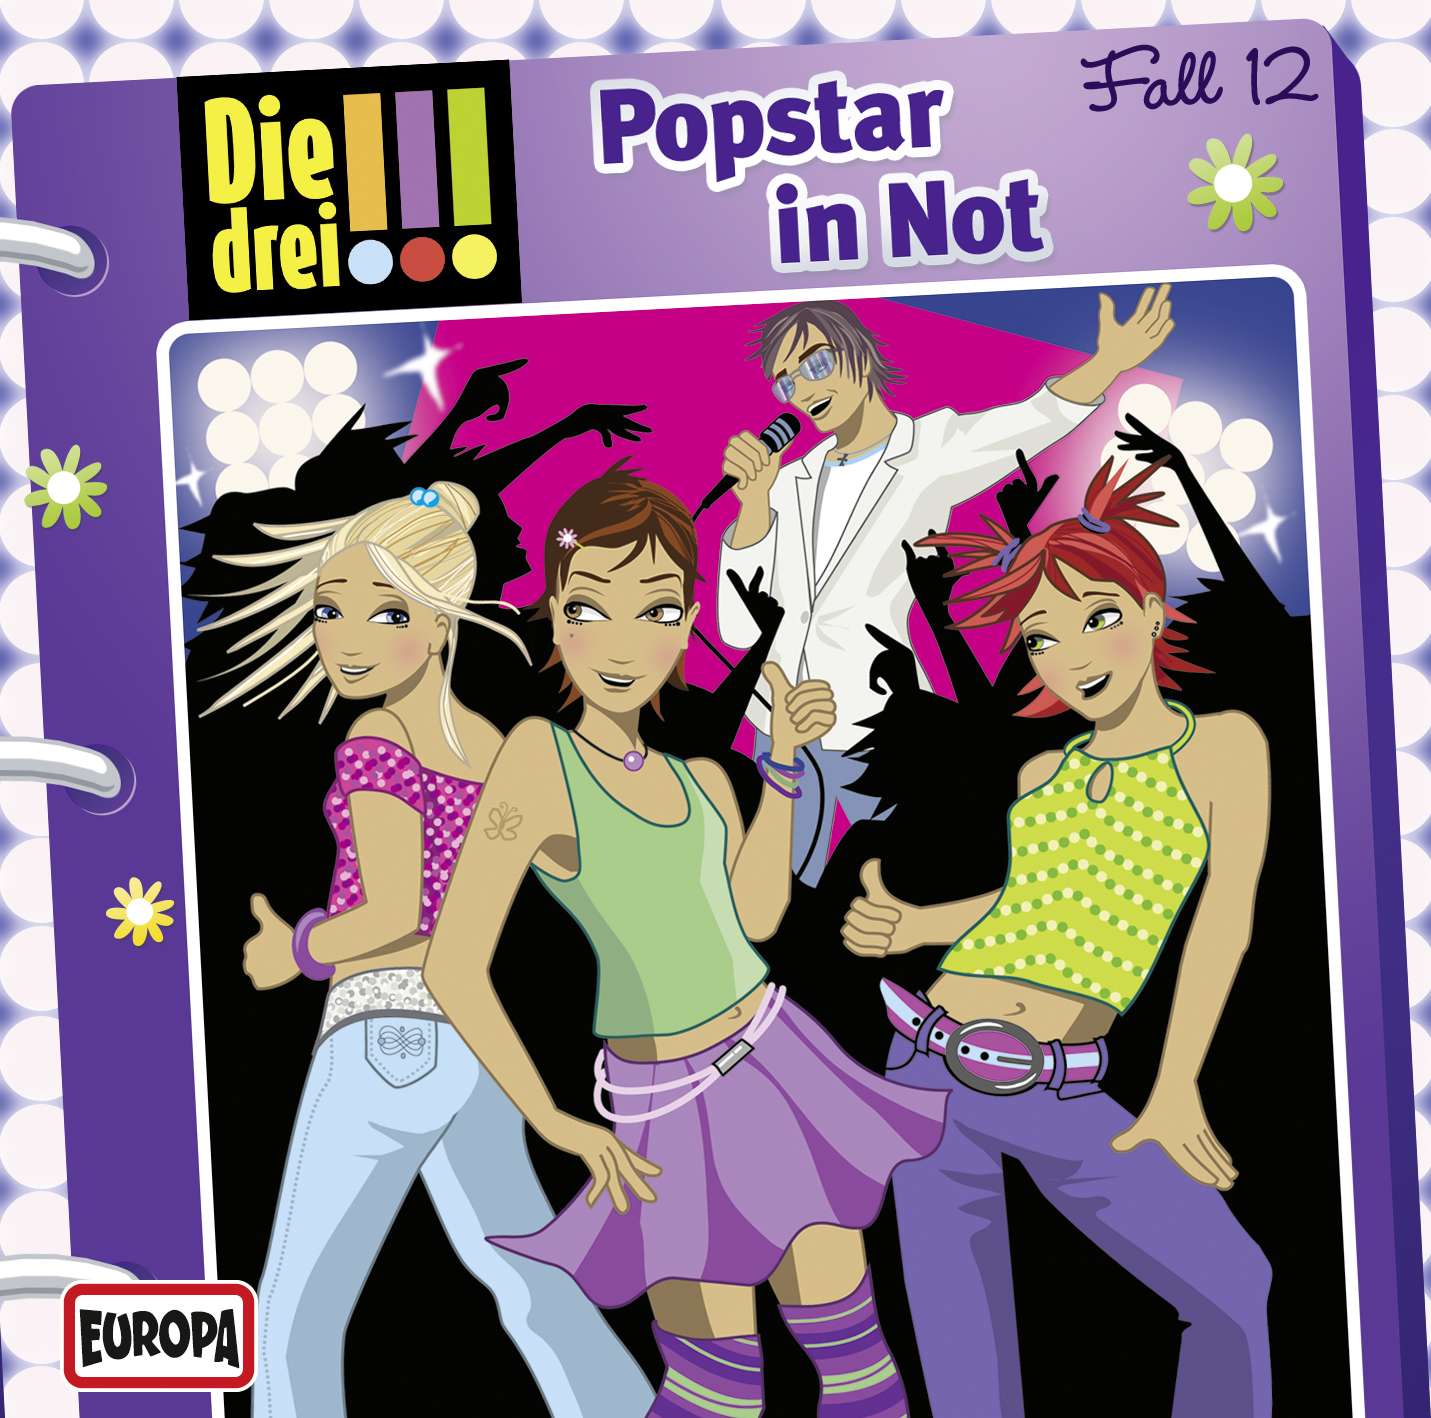 Die drei !!!: Popstar in Not